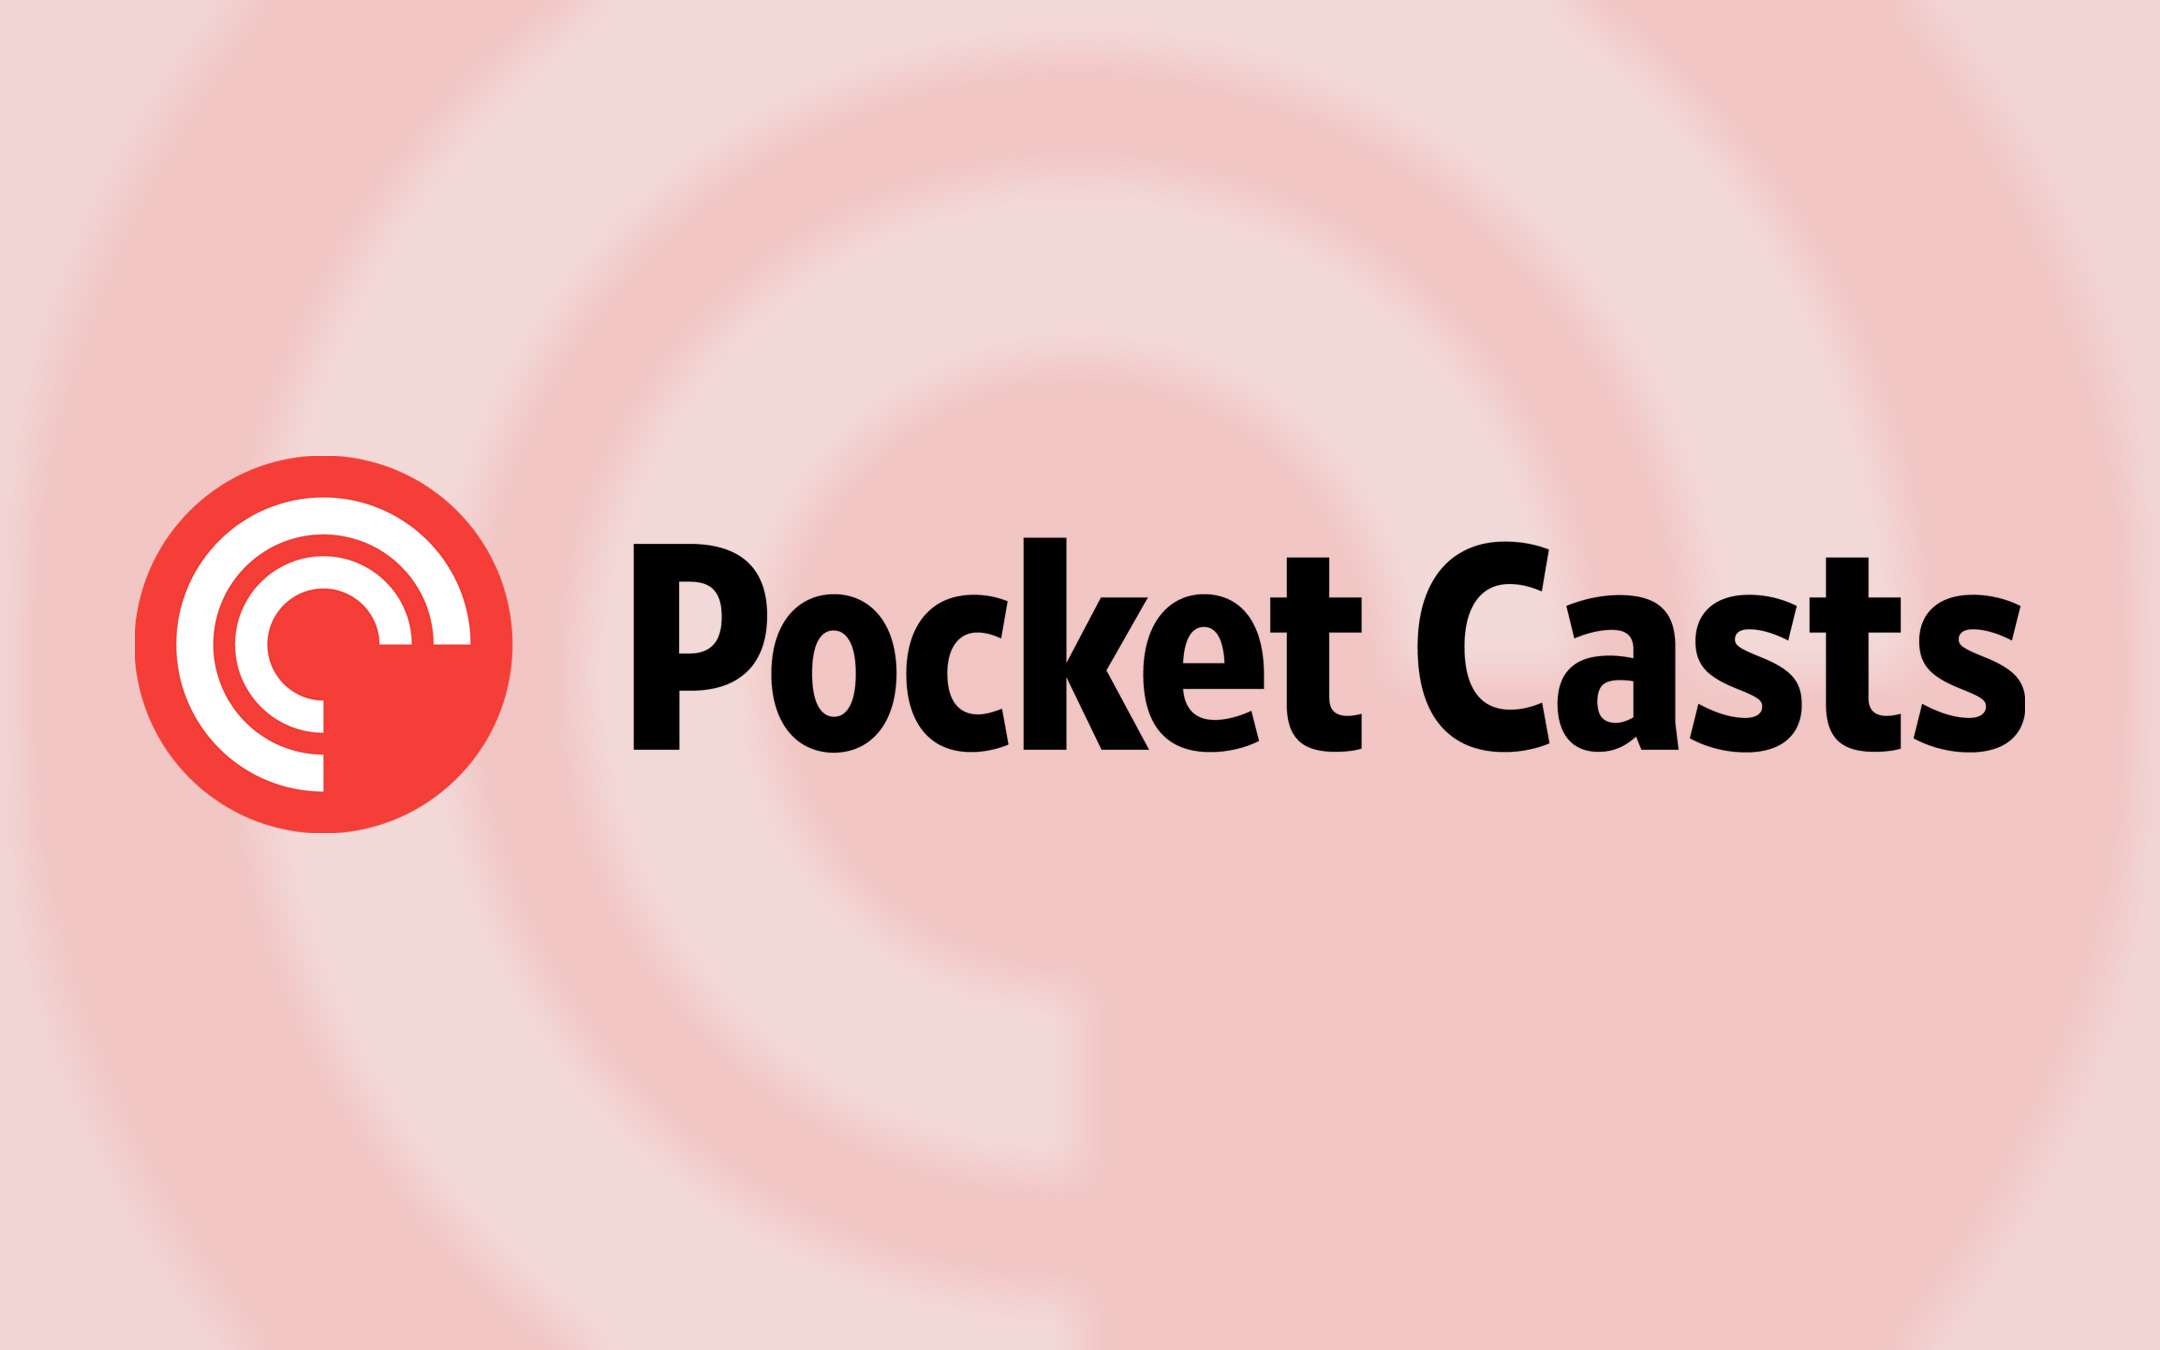 automattic owner buys app pocket casts